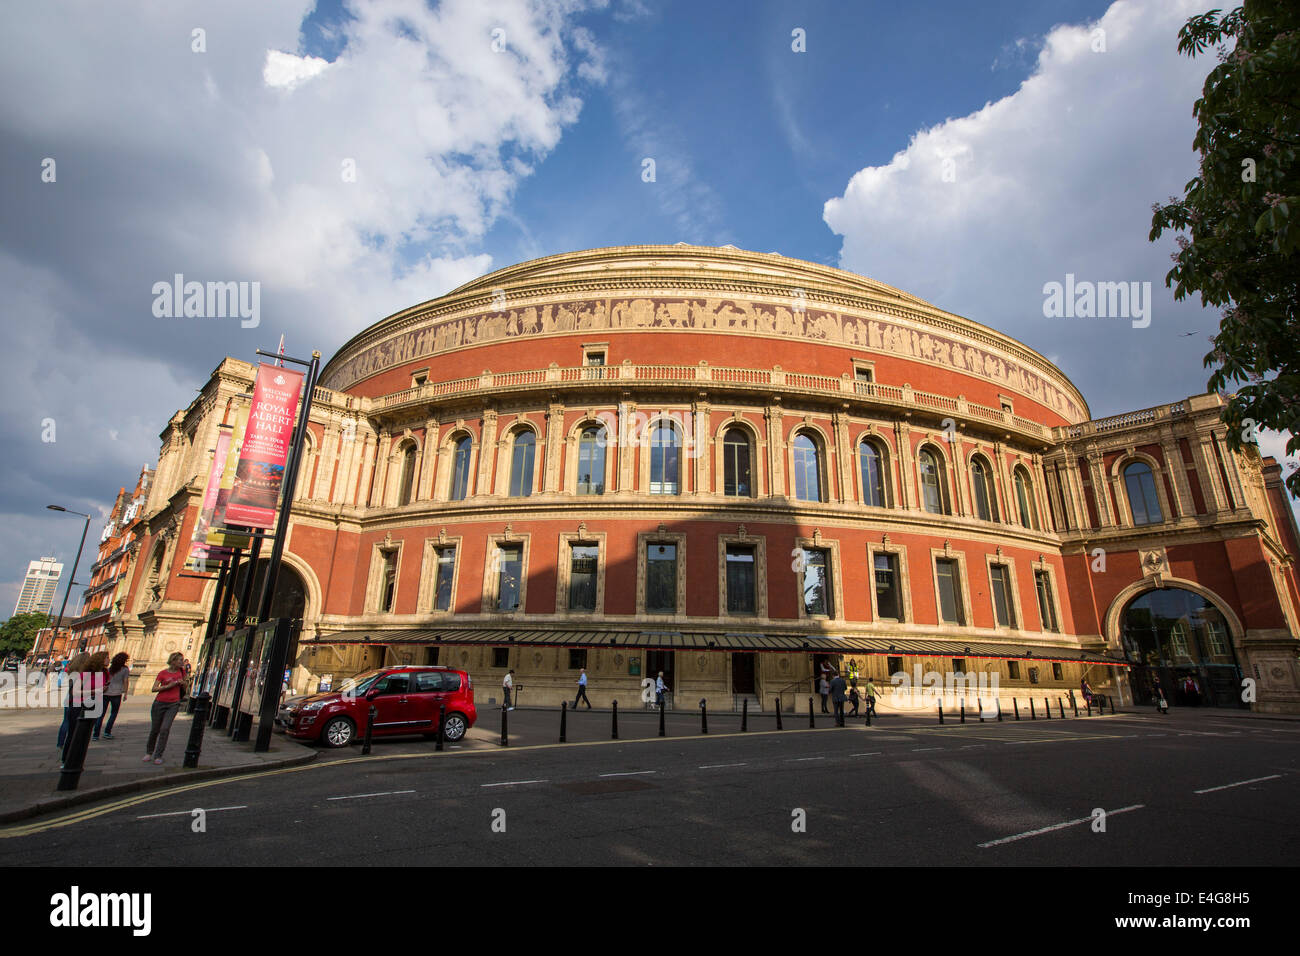 The Royal Albert Hall in London, UK. Stock Photo